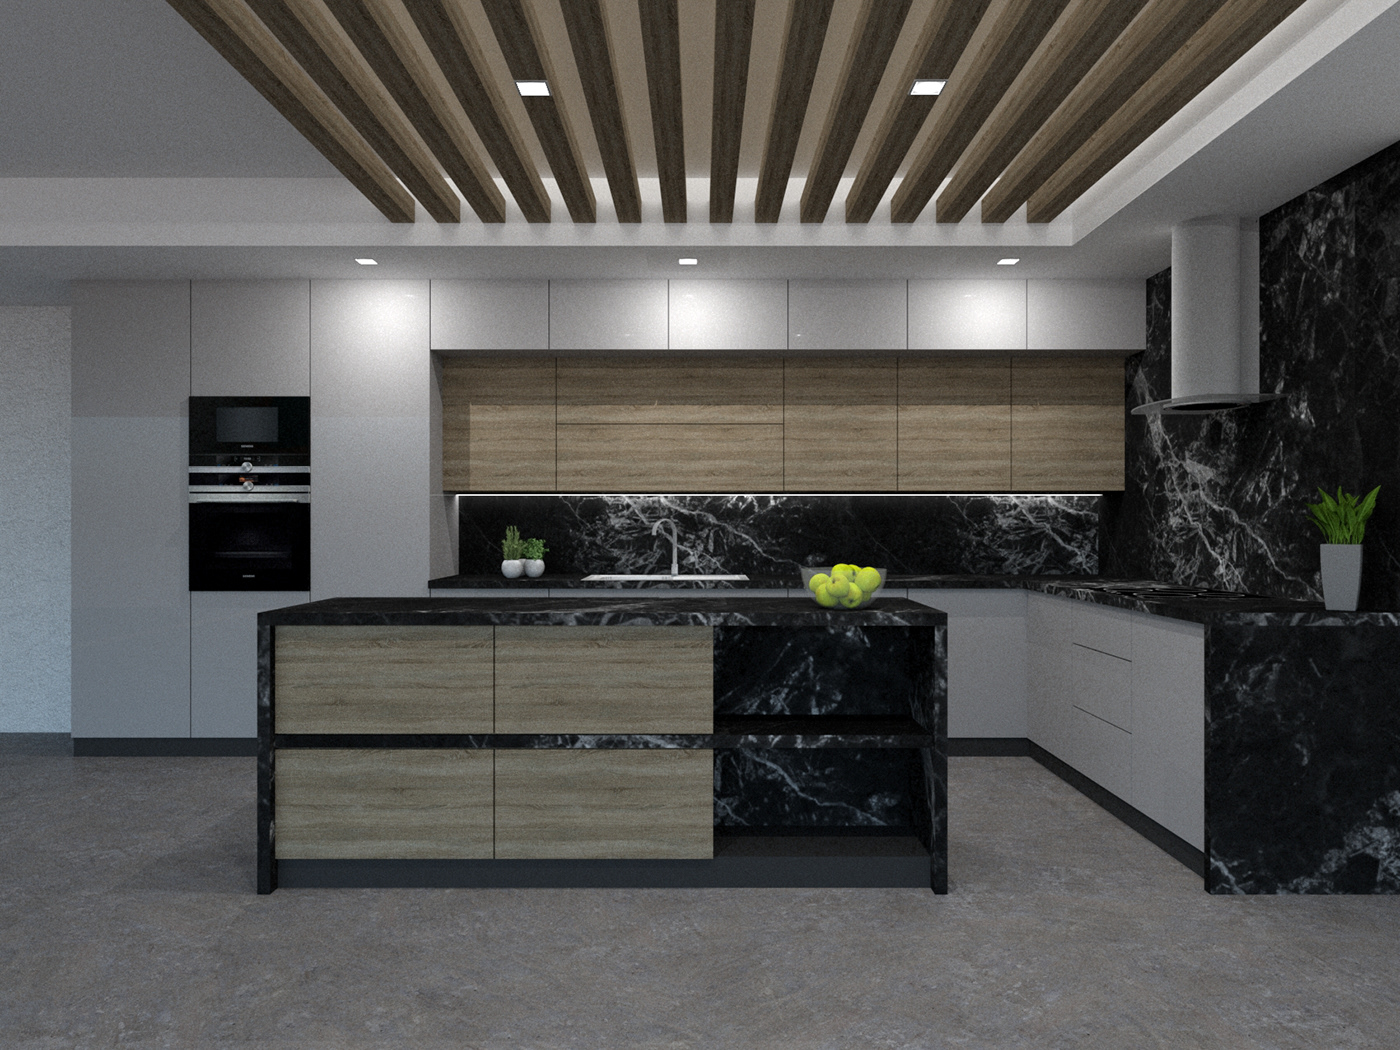 interiordesign interor kitchendesign visualization vray